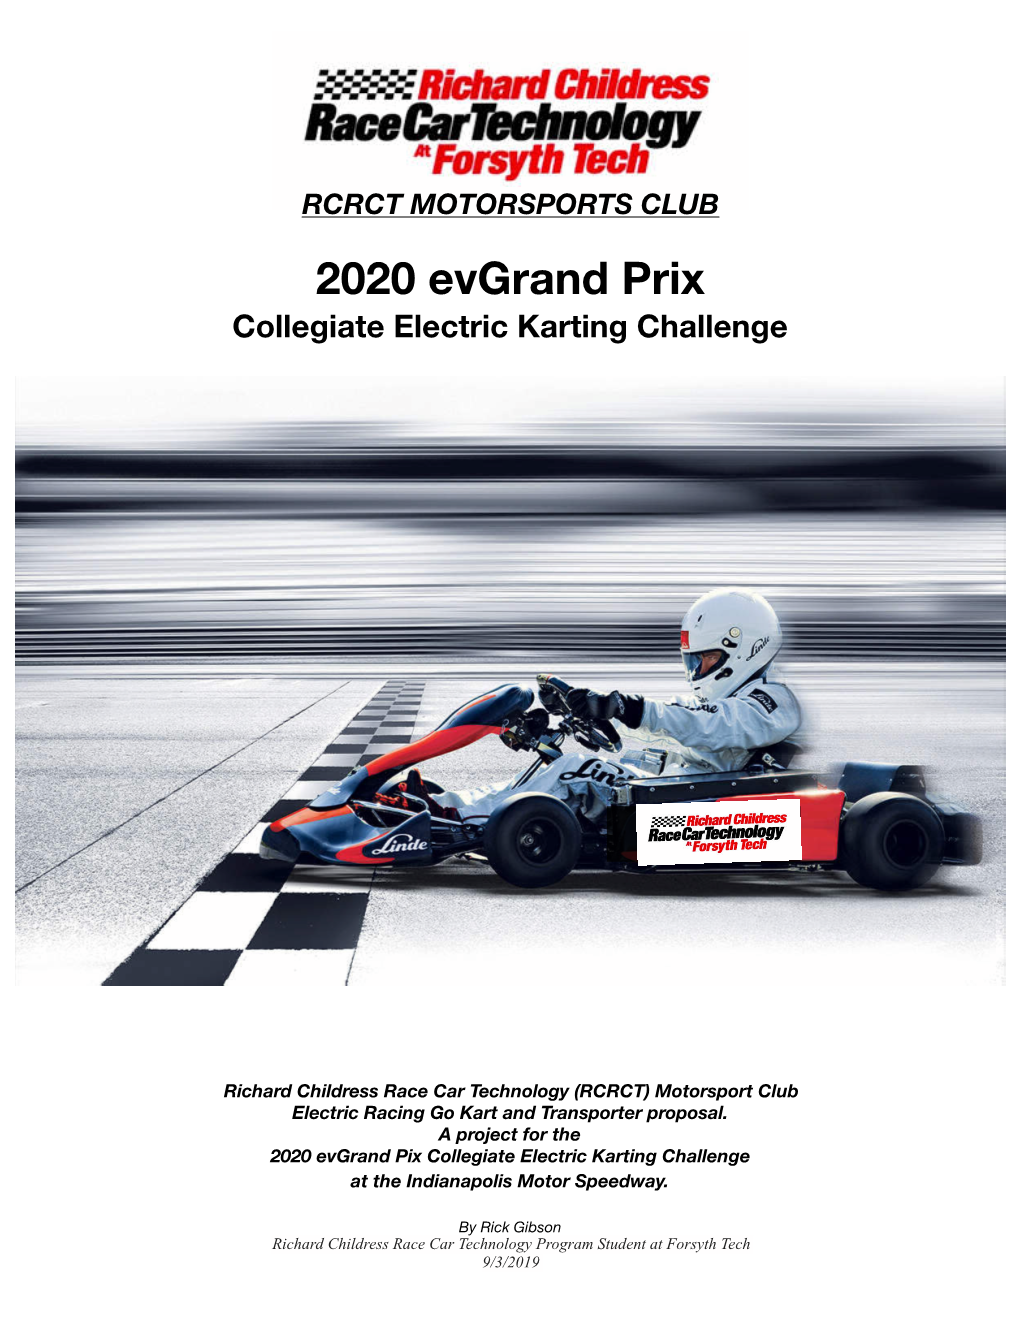 Richard Childress Race Car Technology (RCRCT) Motorsport Club Electric Racing Go Kart and Transporter Proposal